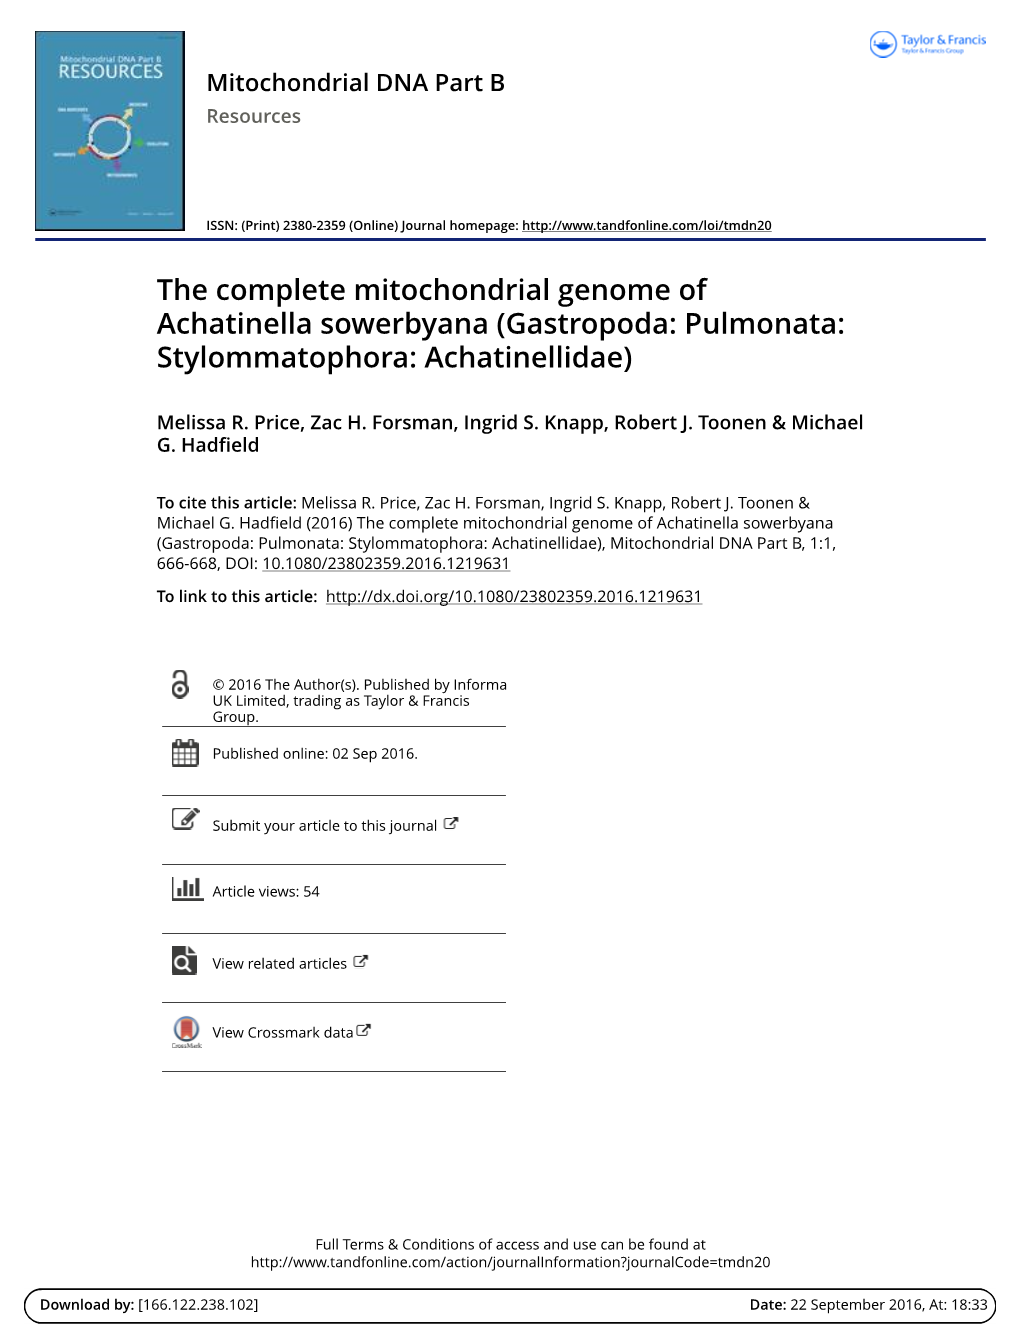 The Complete Mitochondrial Genome of Achatinella Sowerbyana (Gastropoda: Pulmonata: Stylommatophora: Achatinellidae)